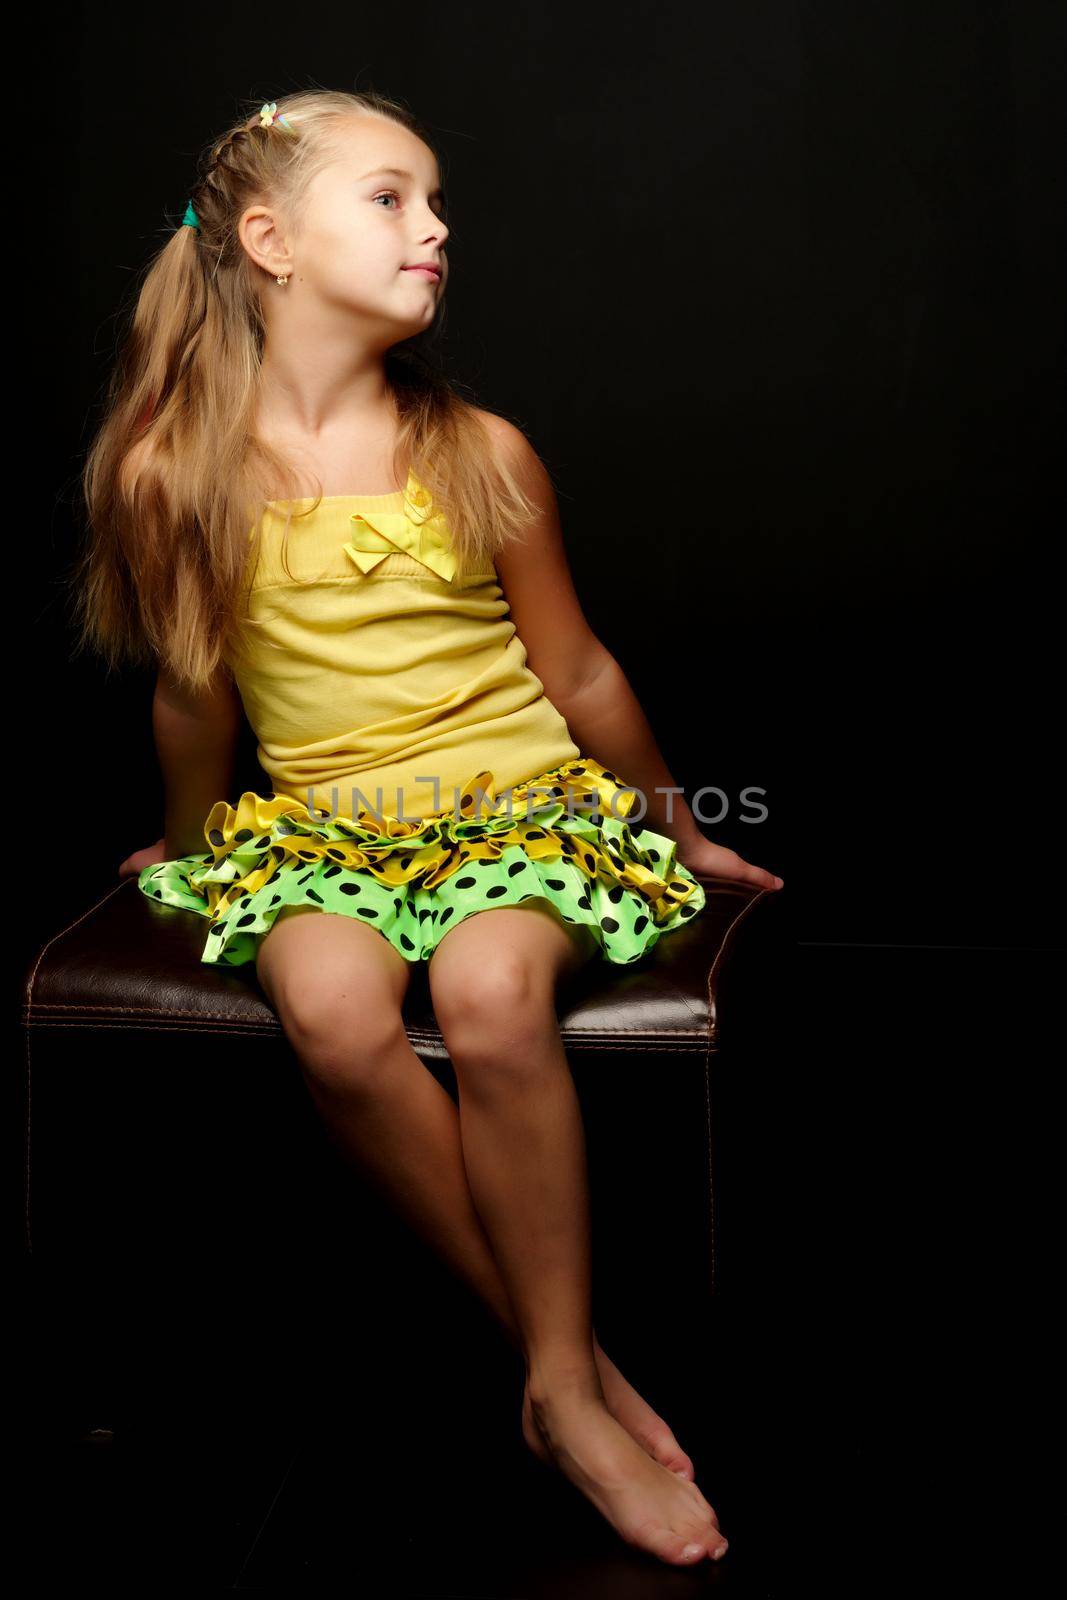 Little girl on a black background by kolesnikov_studio